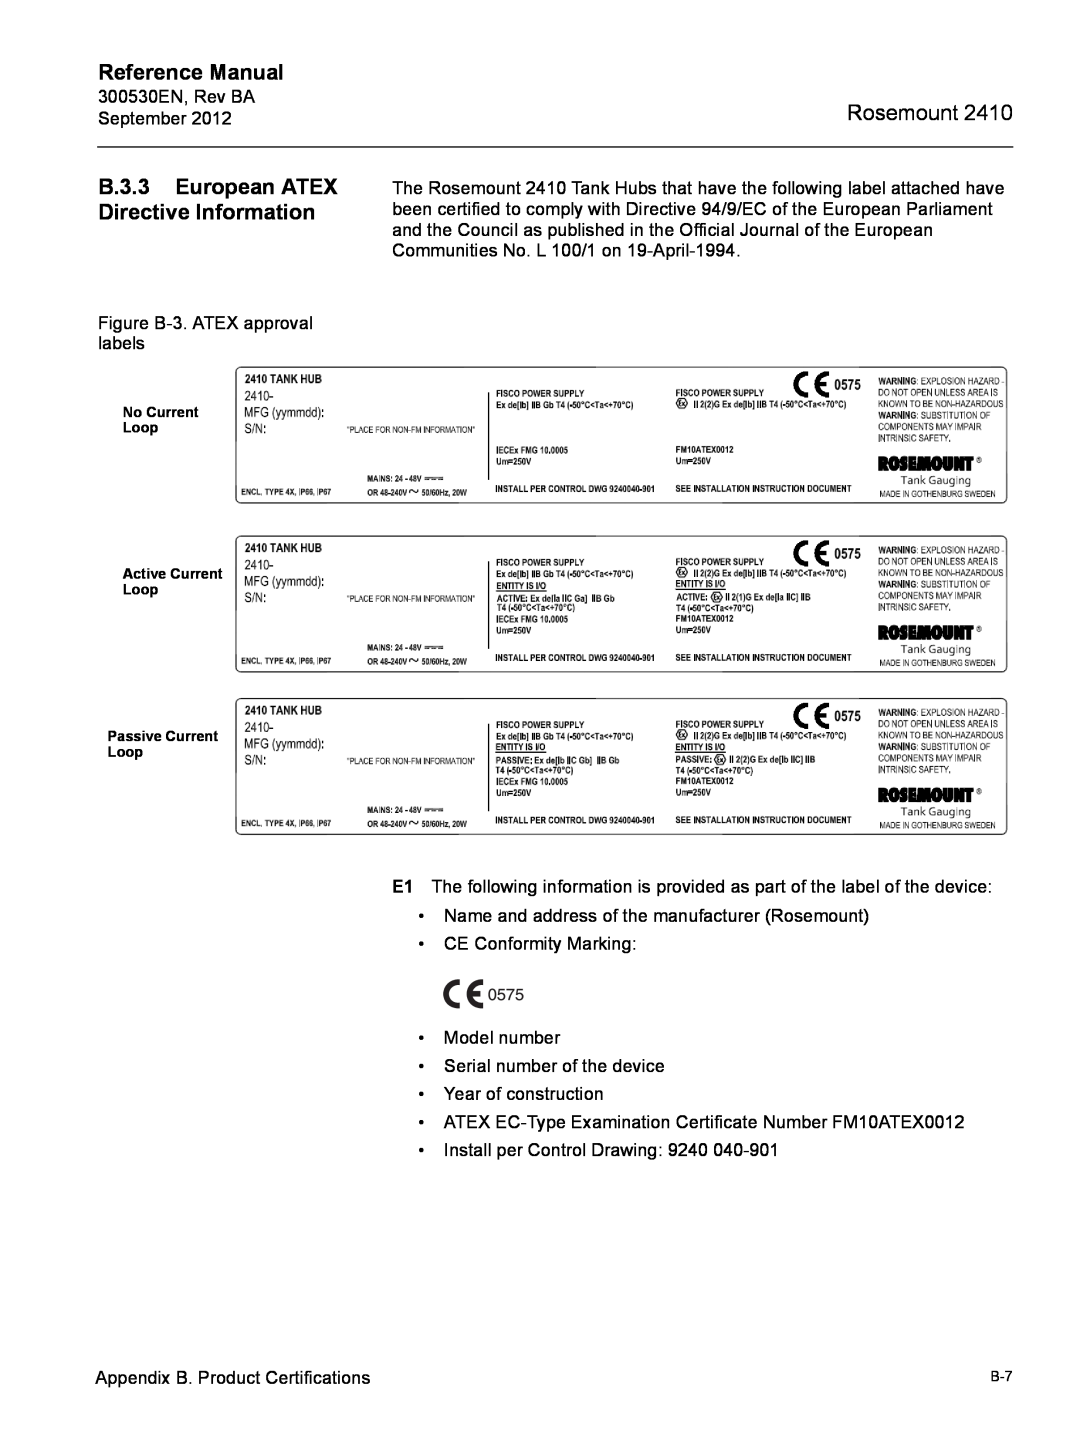 Emerson Process Management Rosemount 2410 manual B.3.3 European ATEX Directive Information, Reference Manual 